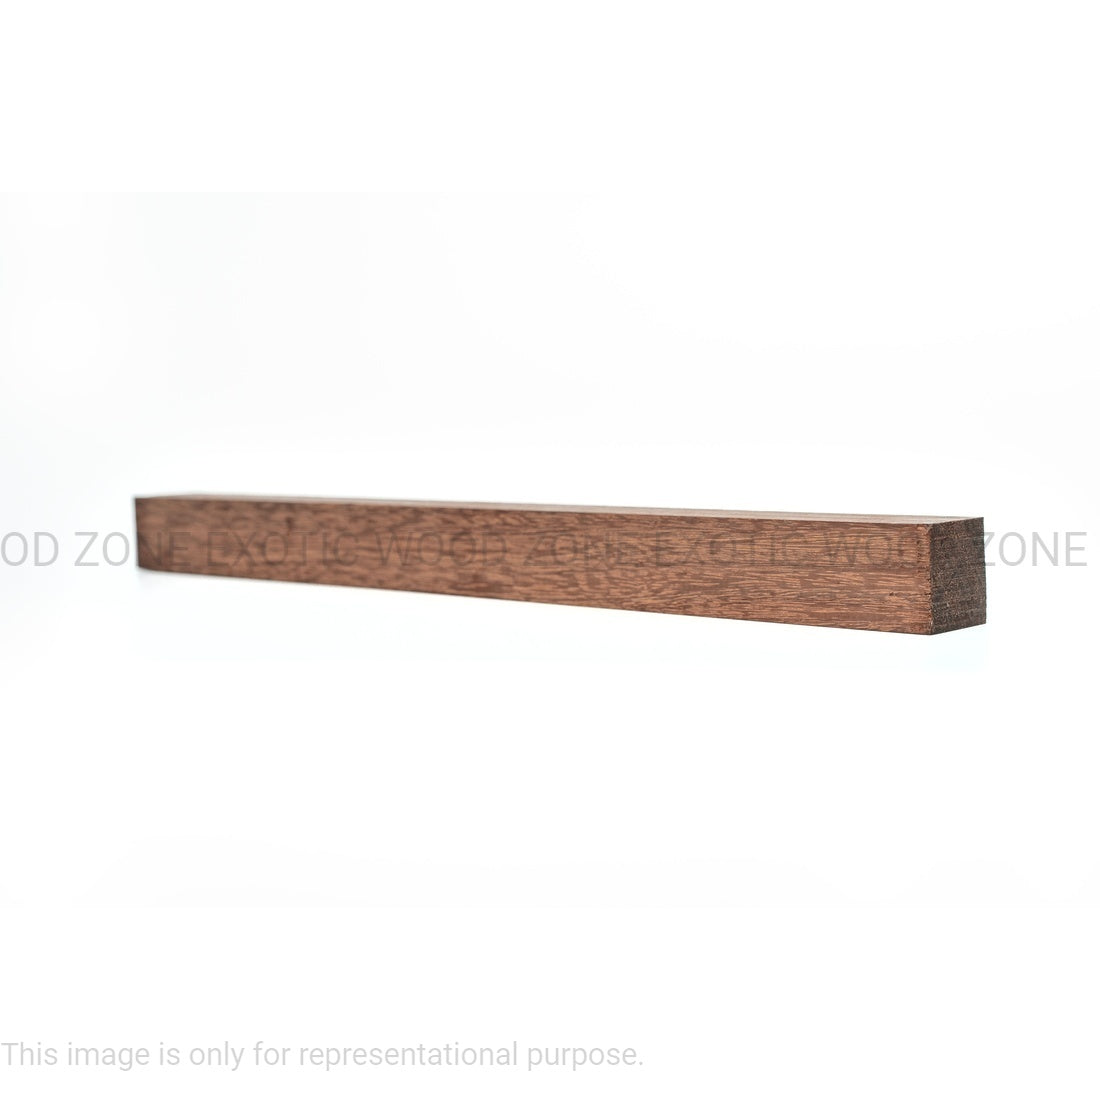 Granadillo Hobby Wood/ Turning Wood Blanks 1 x 1 x 12 inches - Exotic Wood Zone - Buy online Across USA 